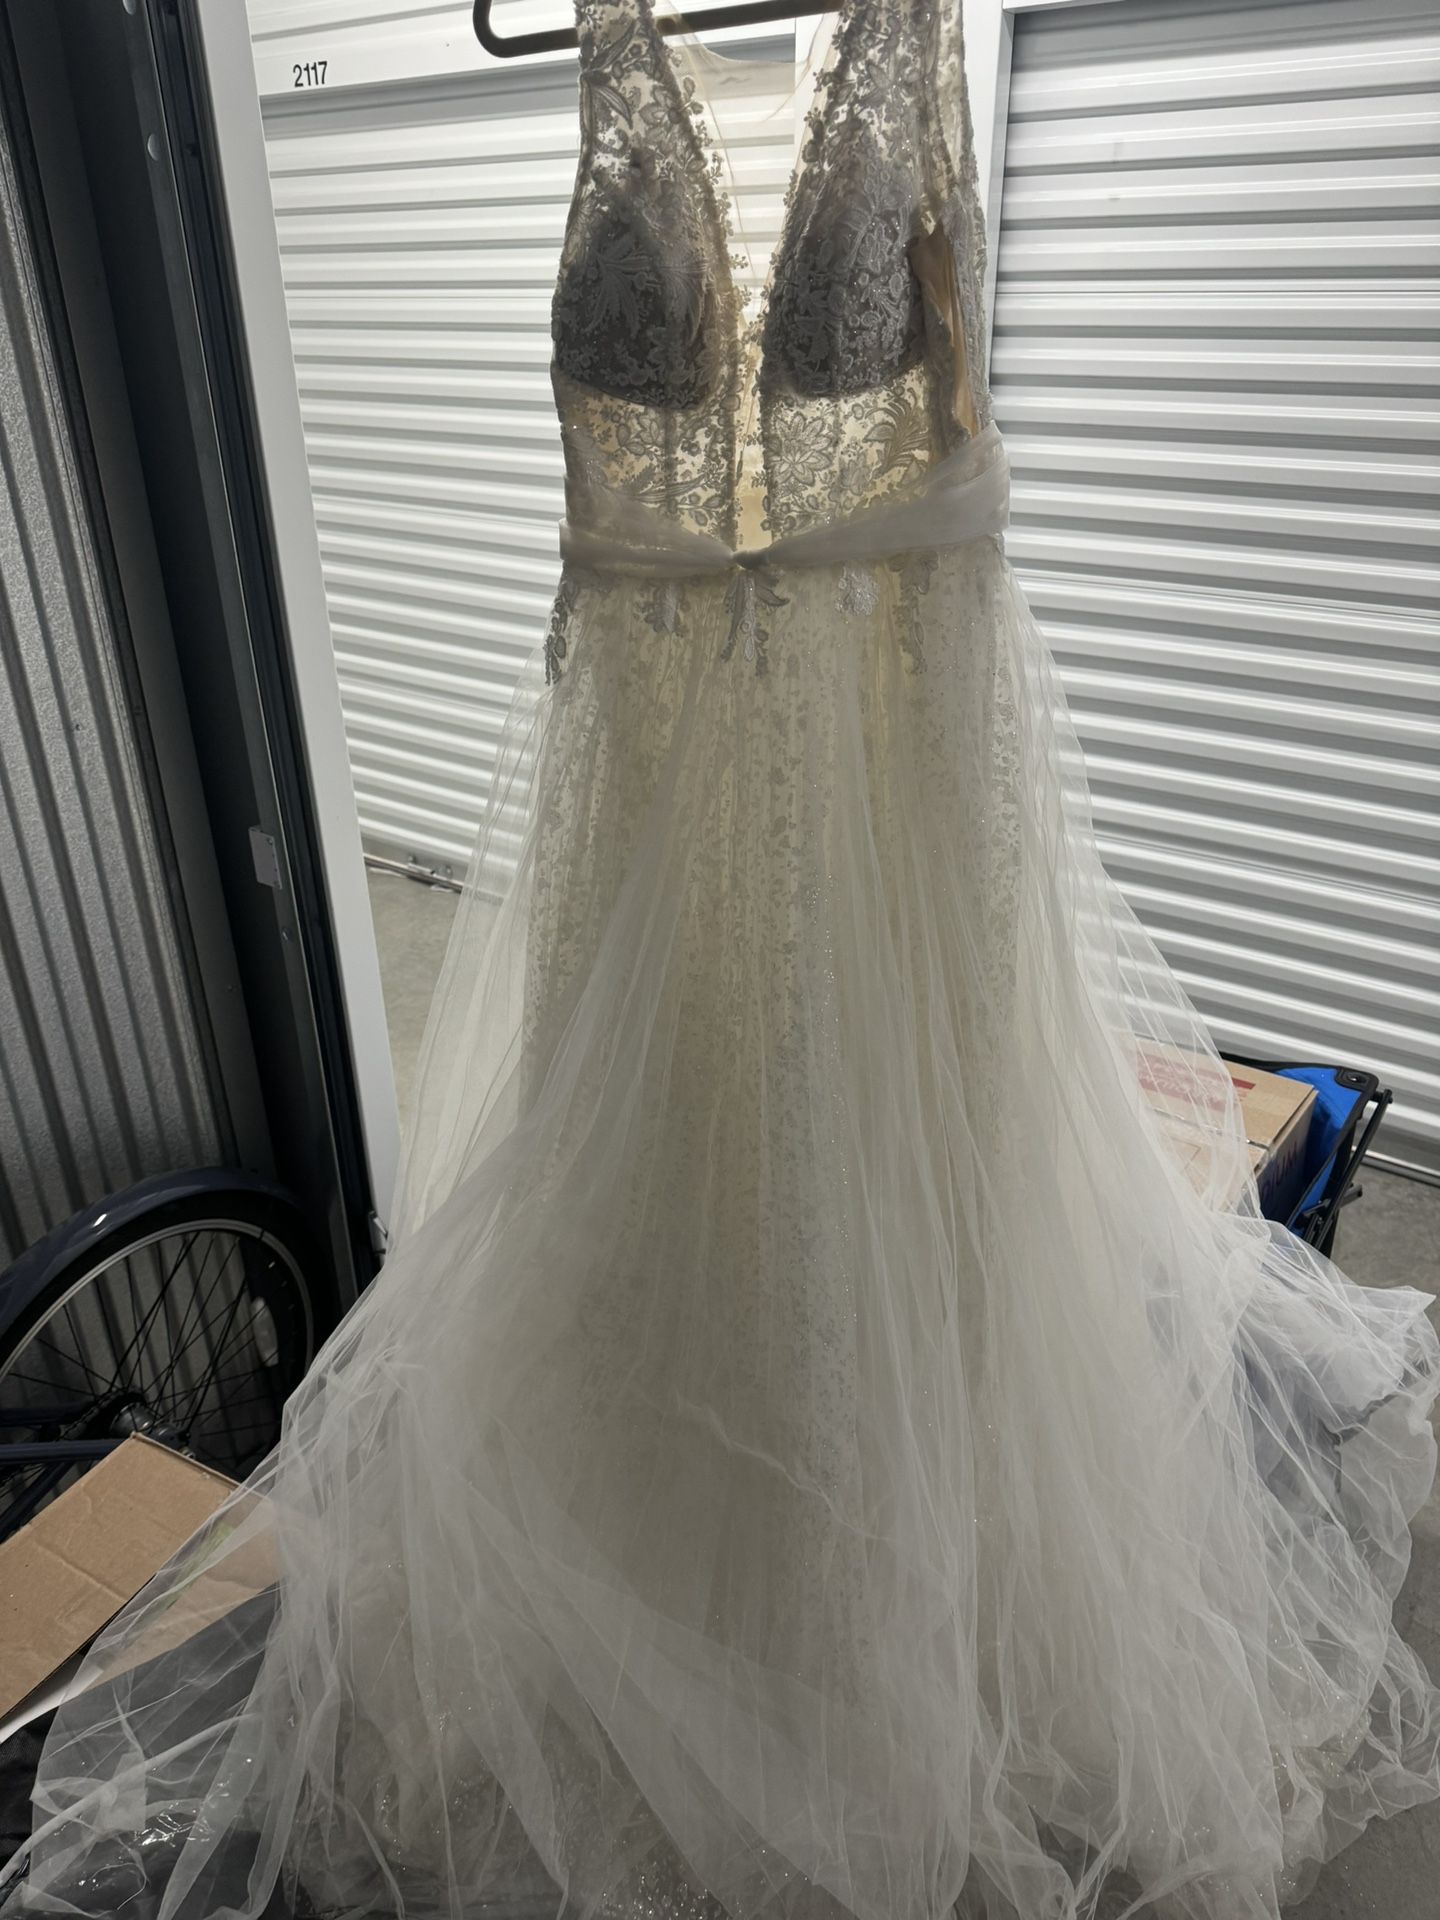 Wedding Dress Size 8-10 Adjustable- Plus Veil!!! Includes Shipping To Most States. Vestido De Novia with Veil. 